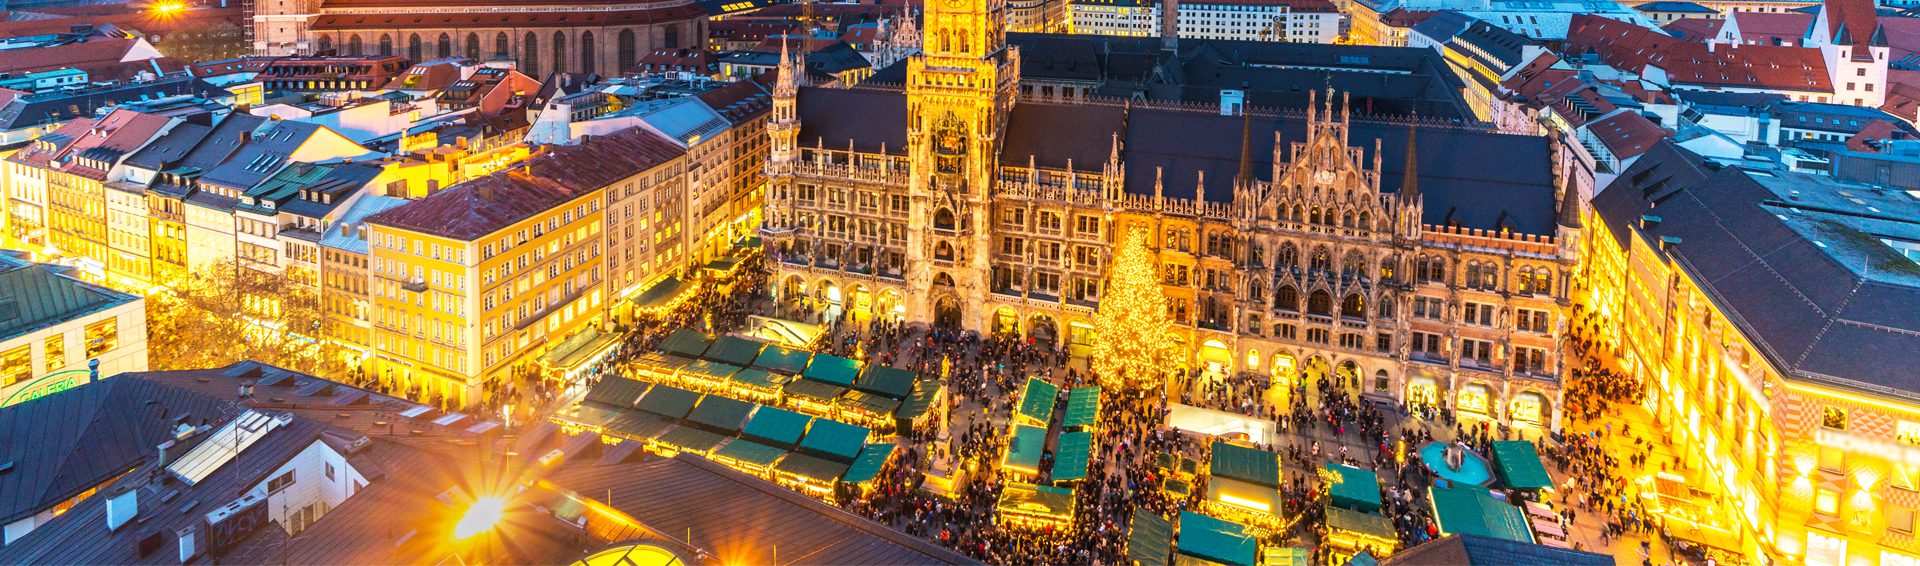 Magical Christmas Markets: Munich to Budapest